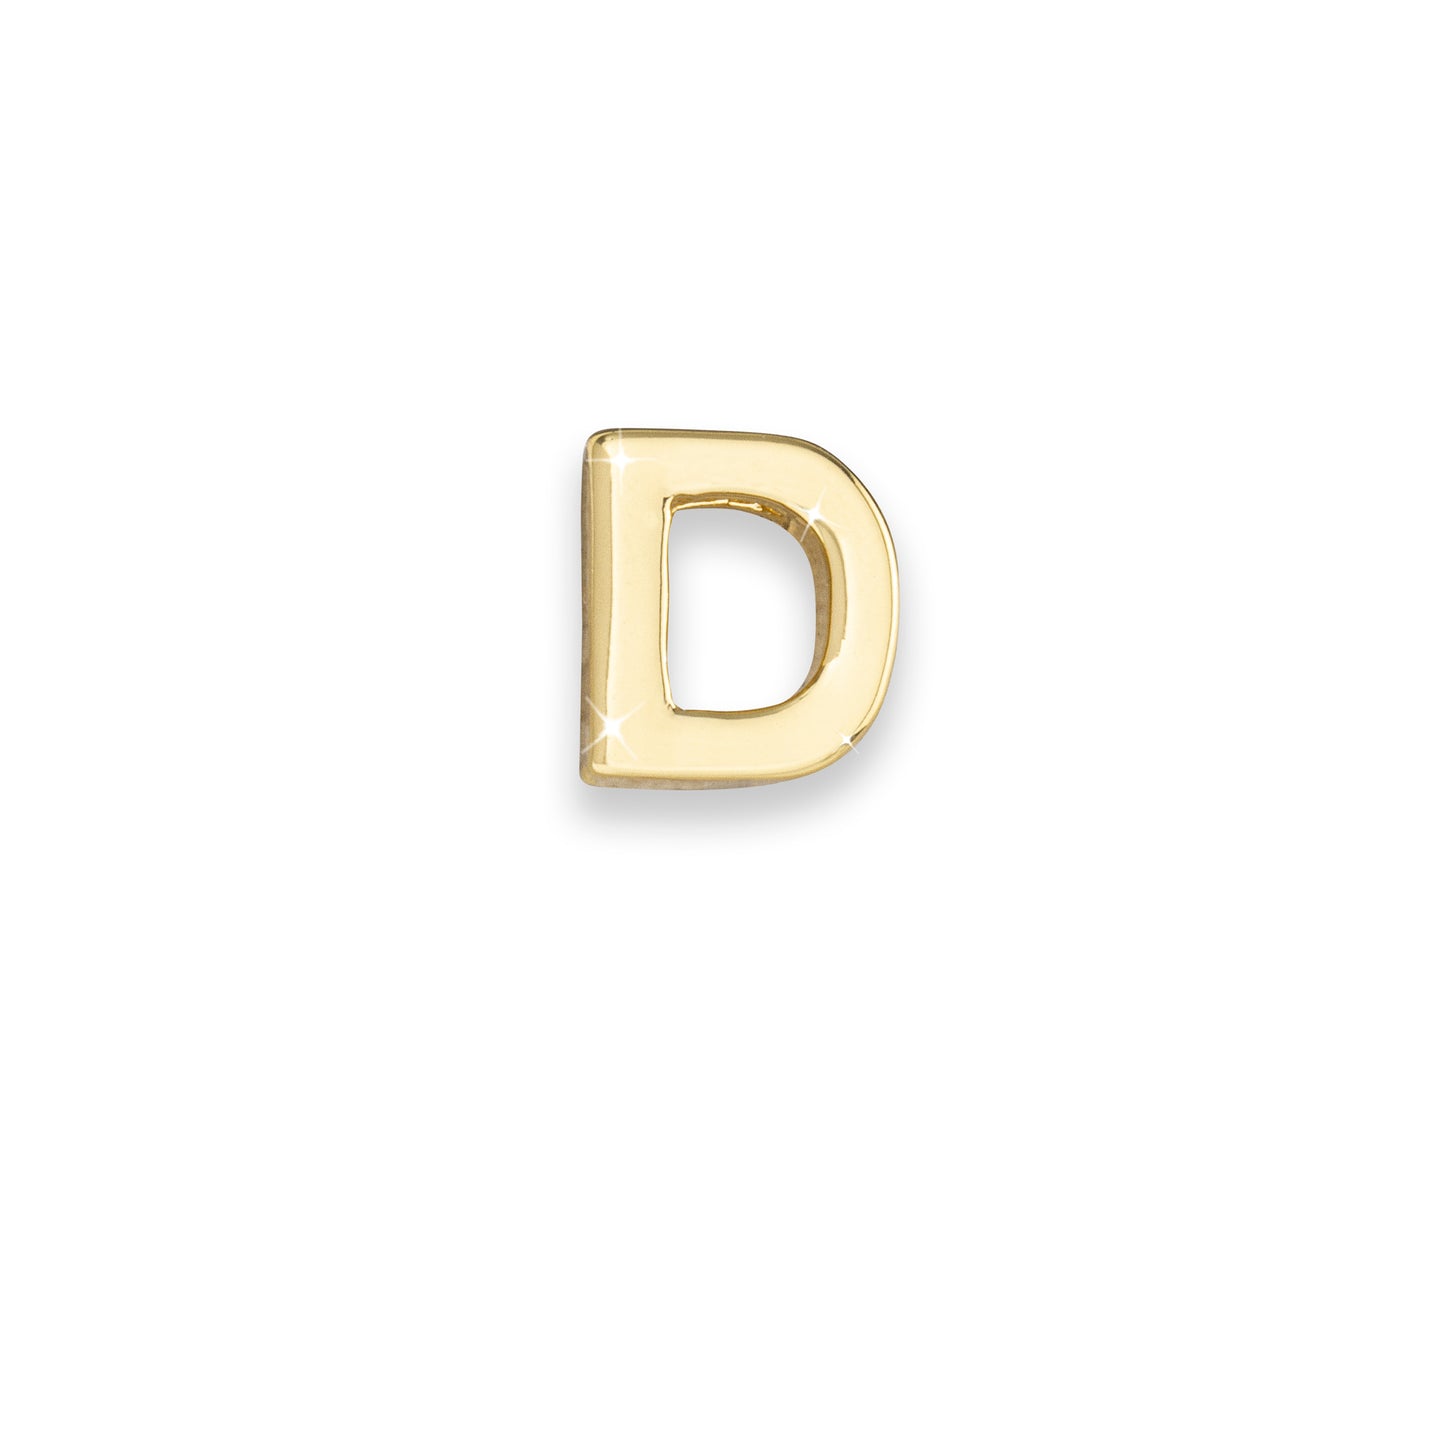 Gold letter D monogram charm for necklaces & bracelets